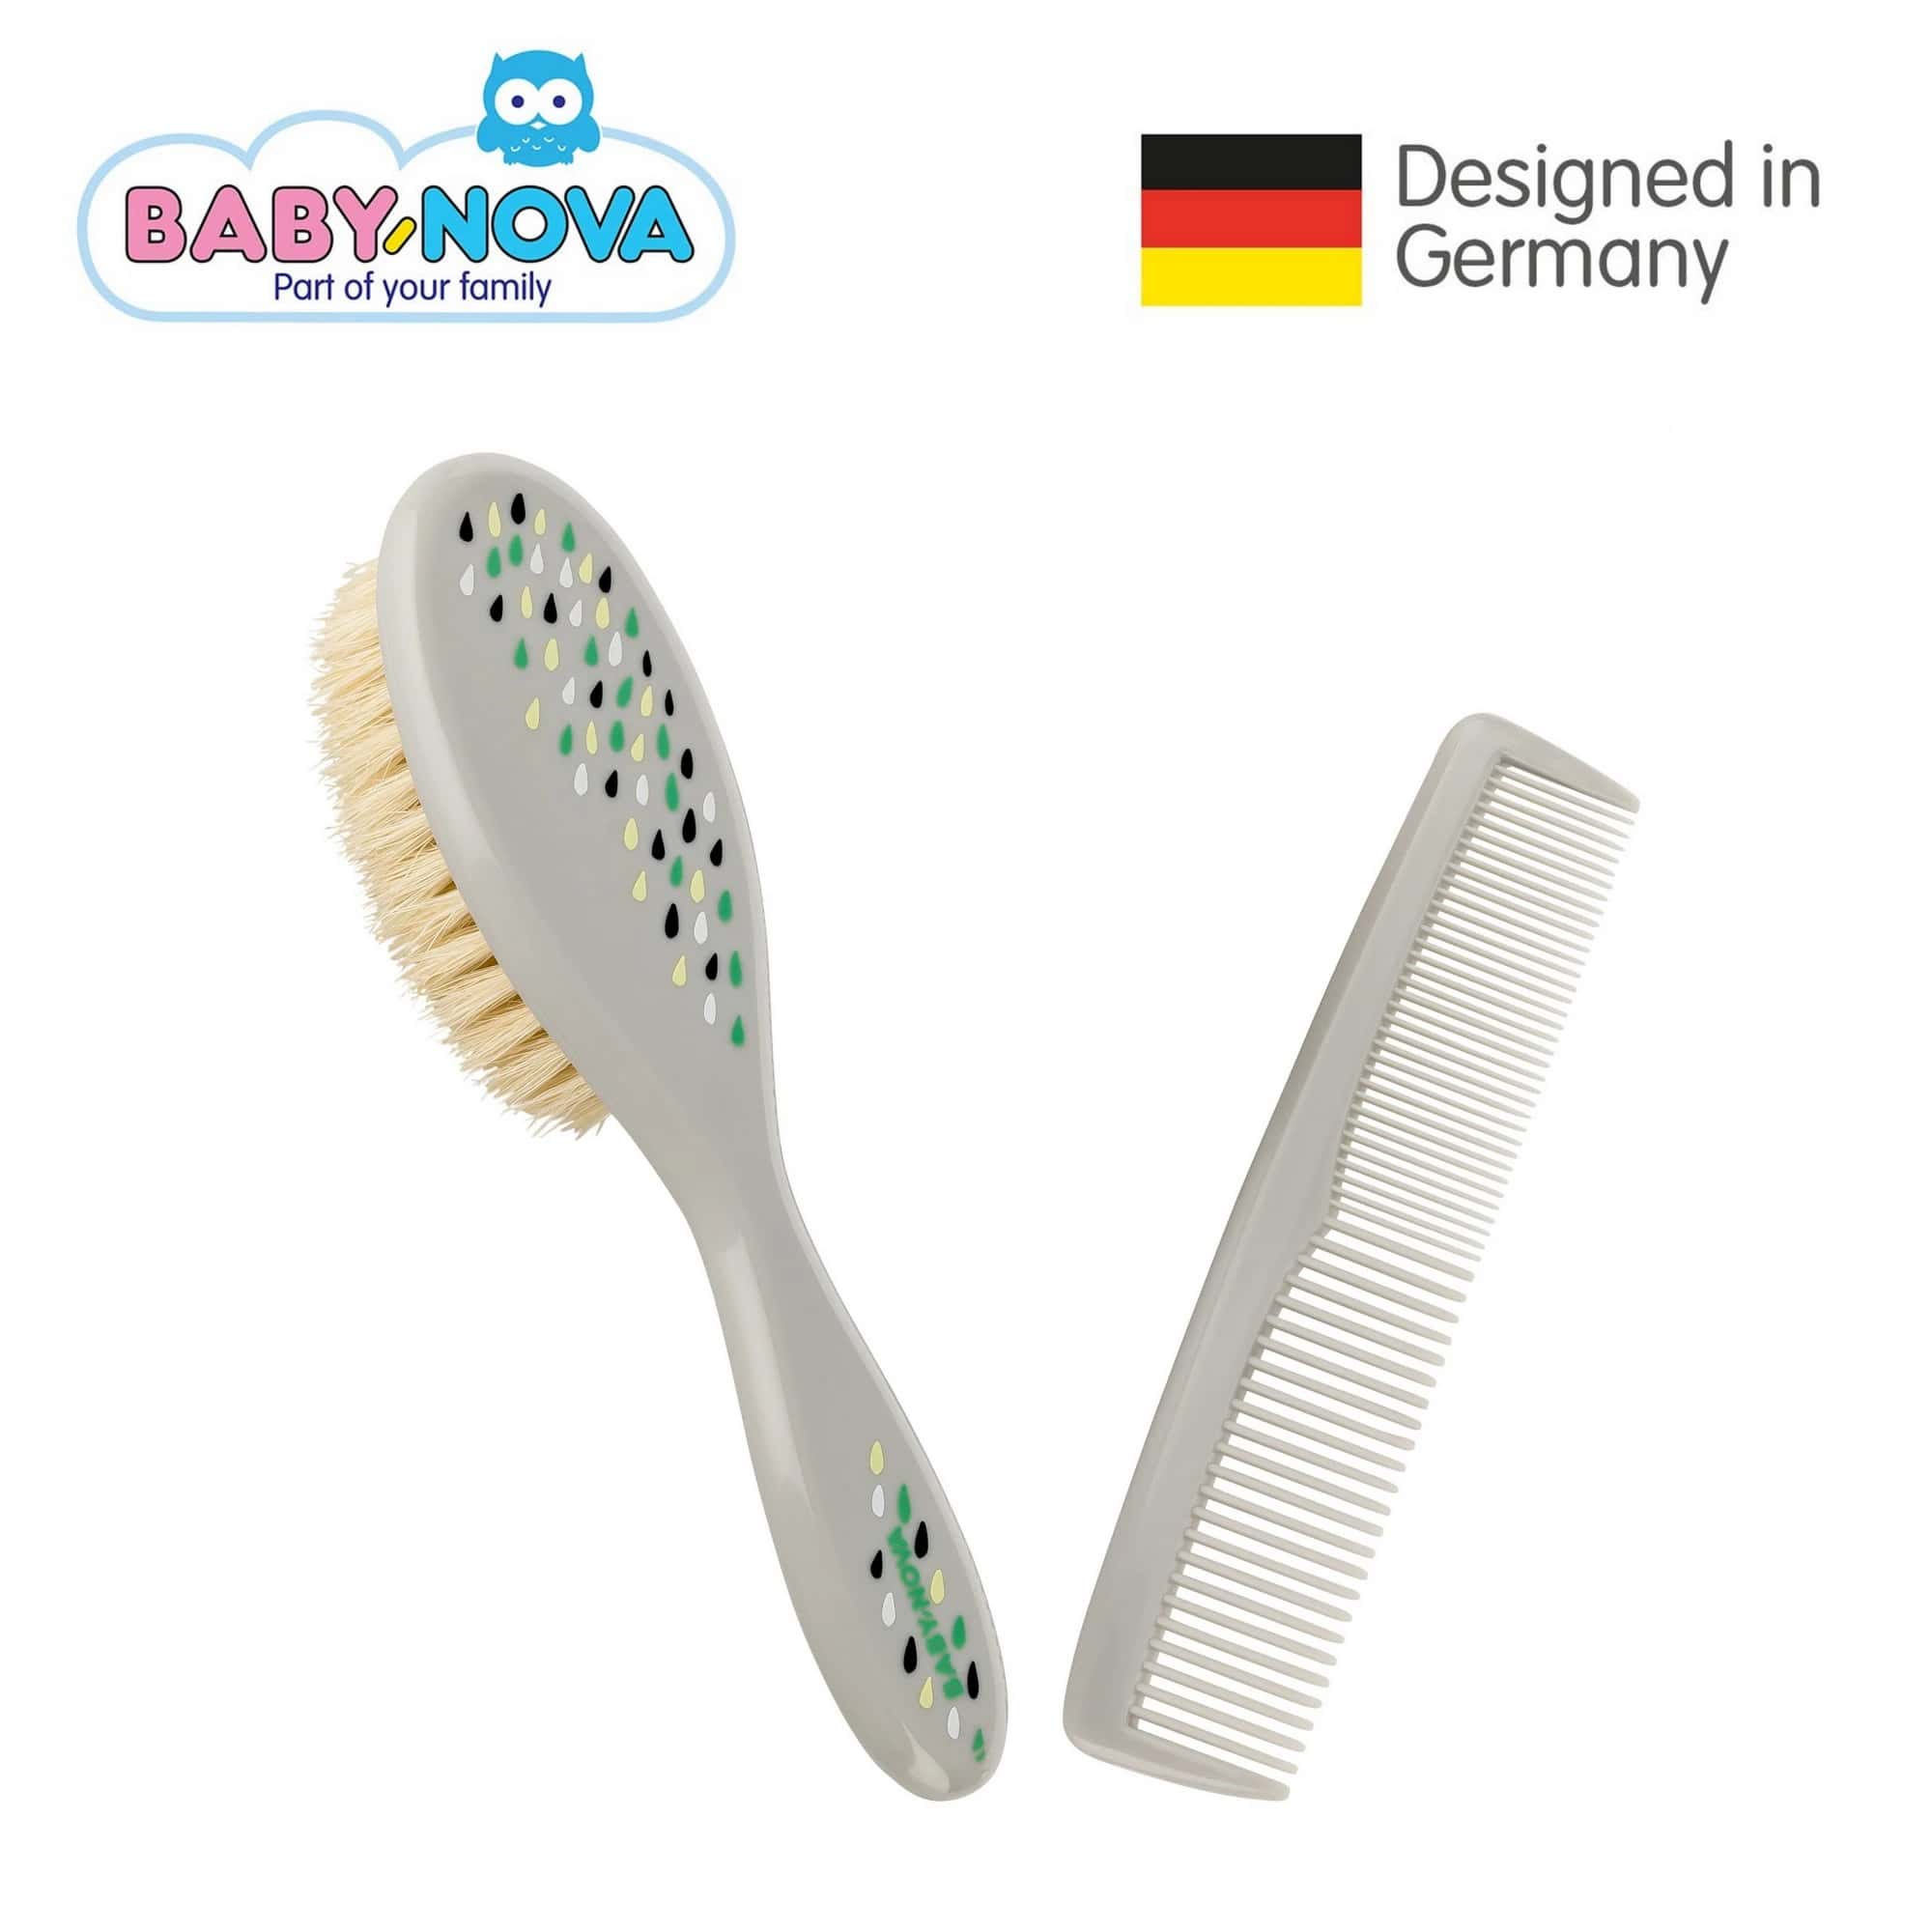 Baby Nova Brush & Comb Set with Natural Bristles